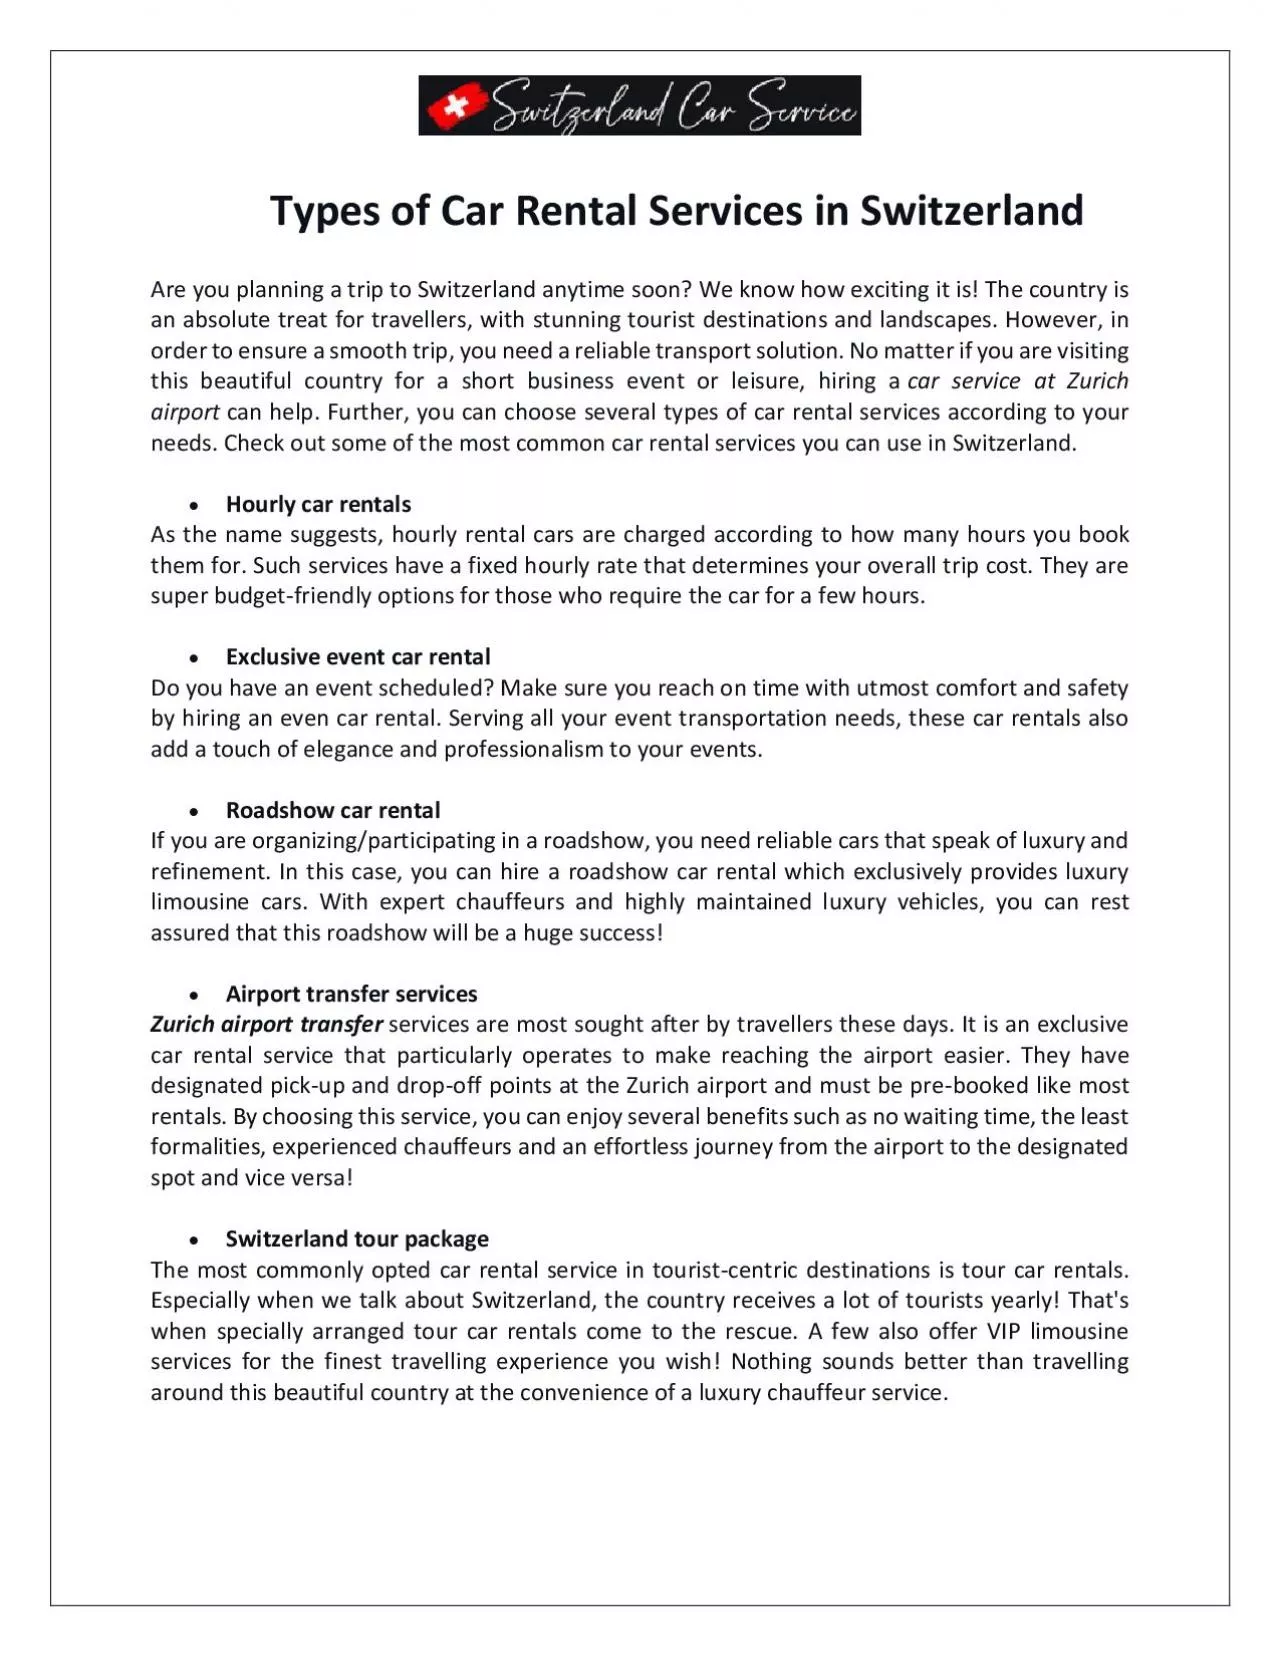 Switzerland Car Service - Types of Car Rental Services in Switzerland